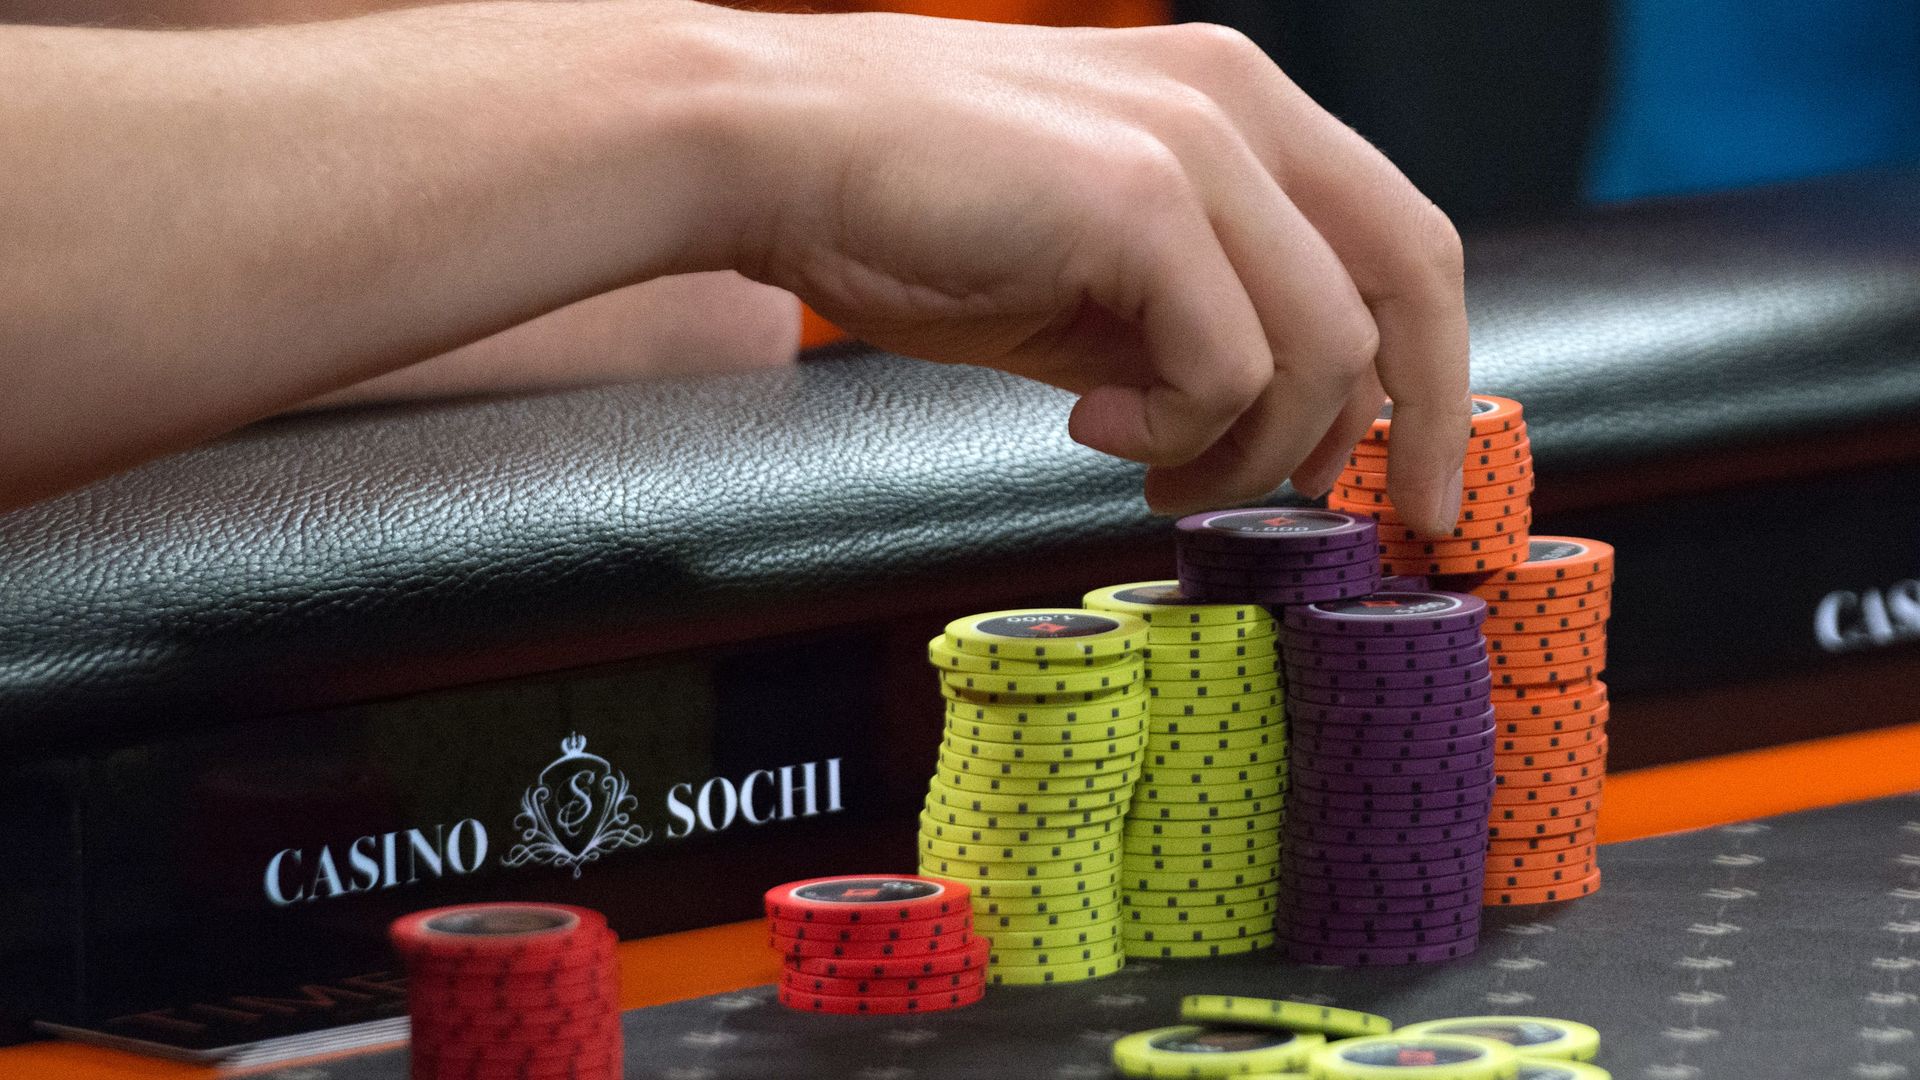 A gambler's hand reaching for poker chips